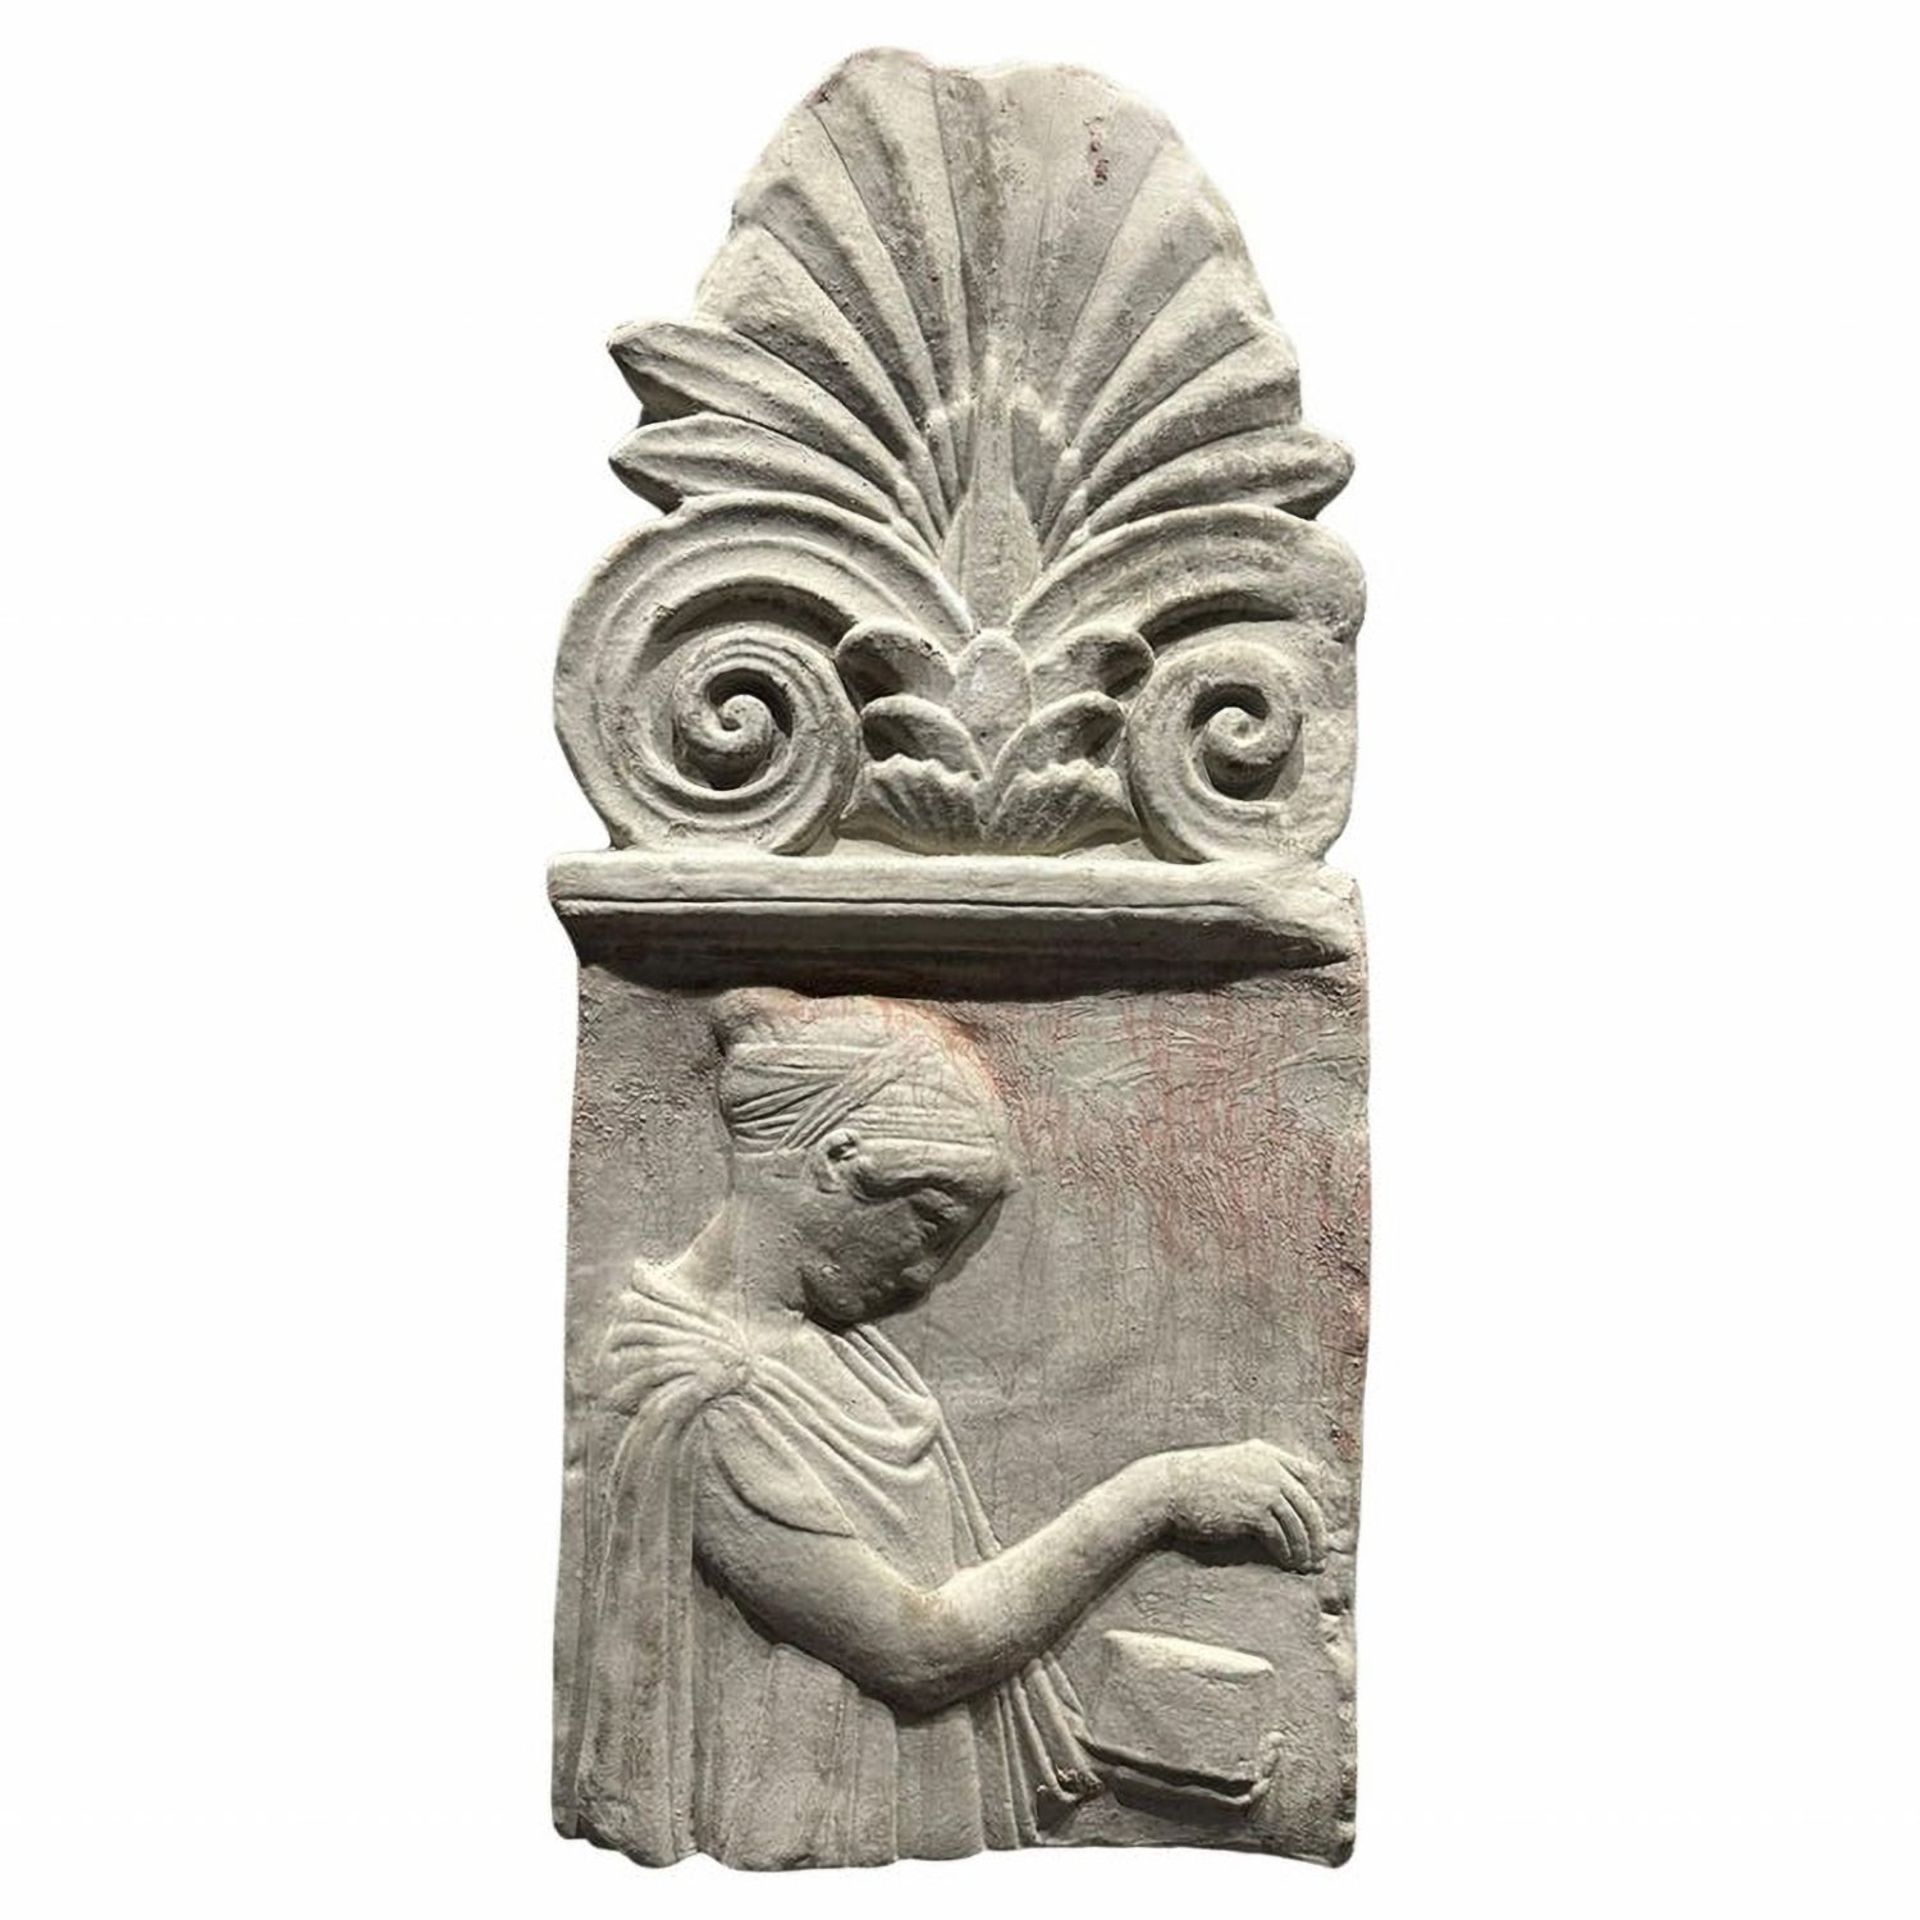 Antefix, Roman sculpture in terracotta, early 20th century